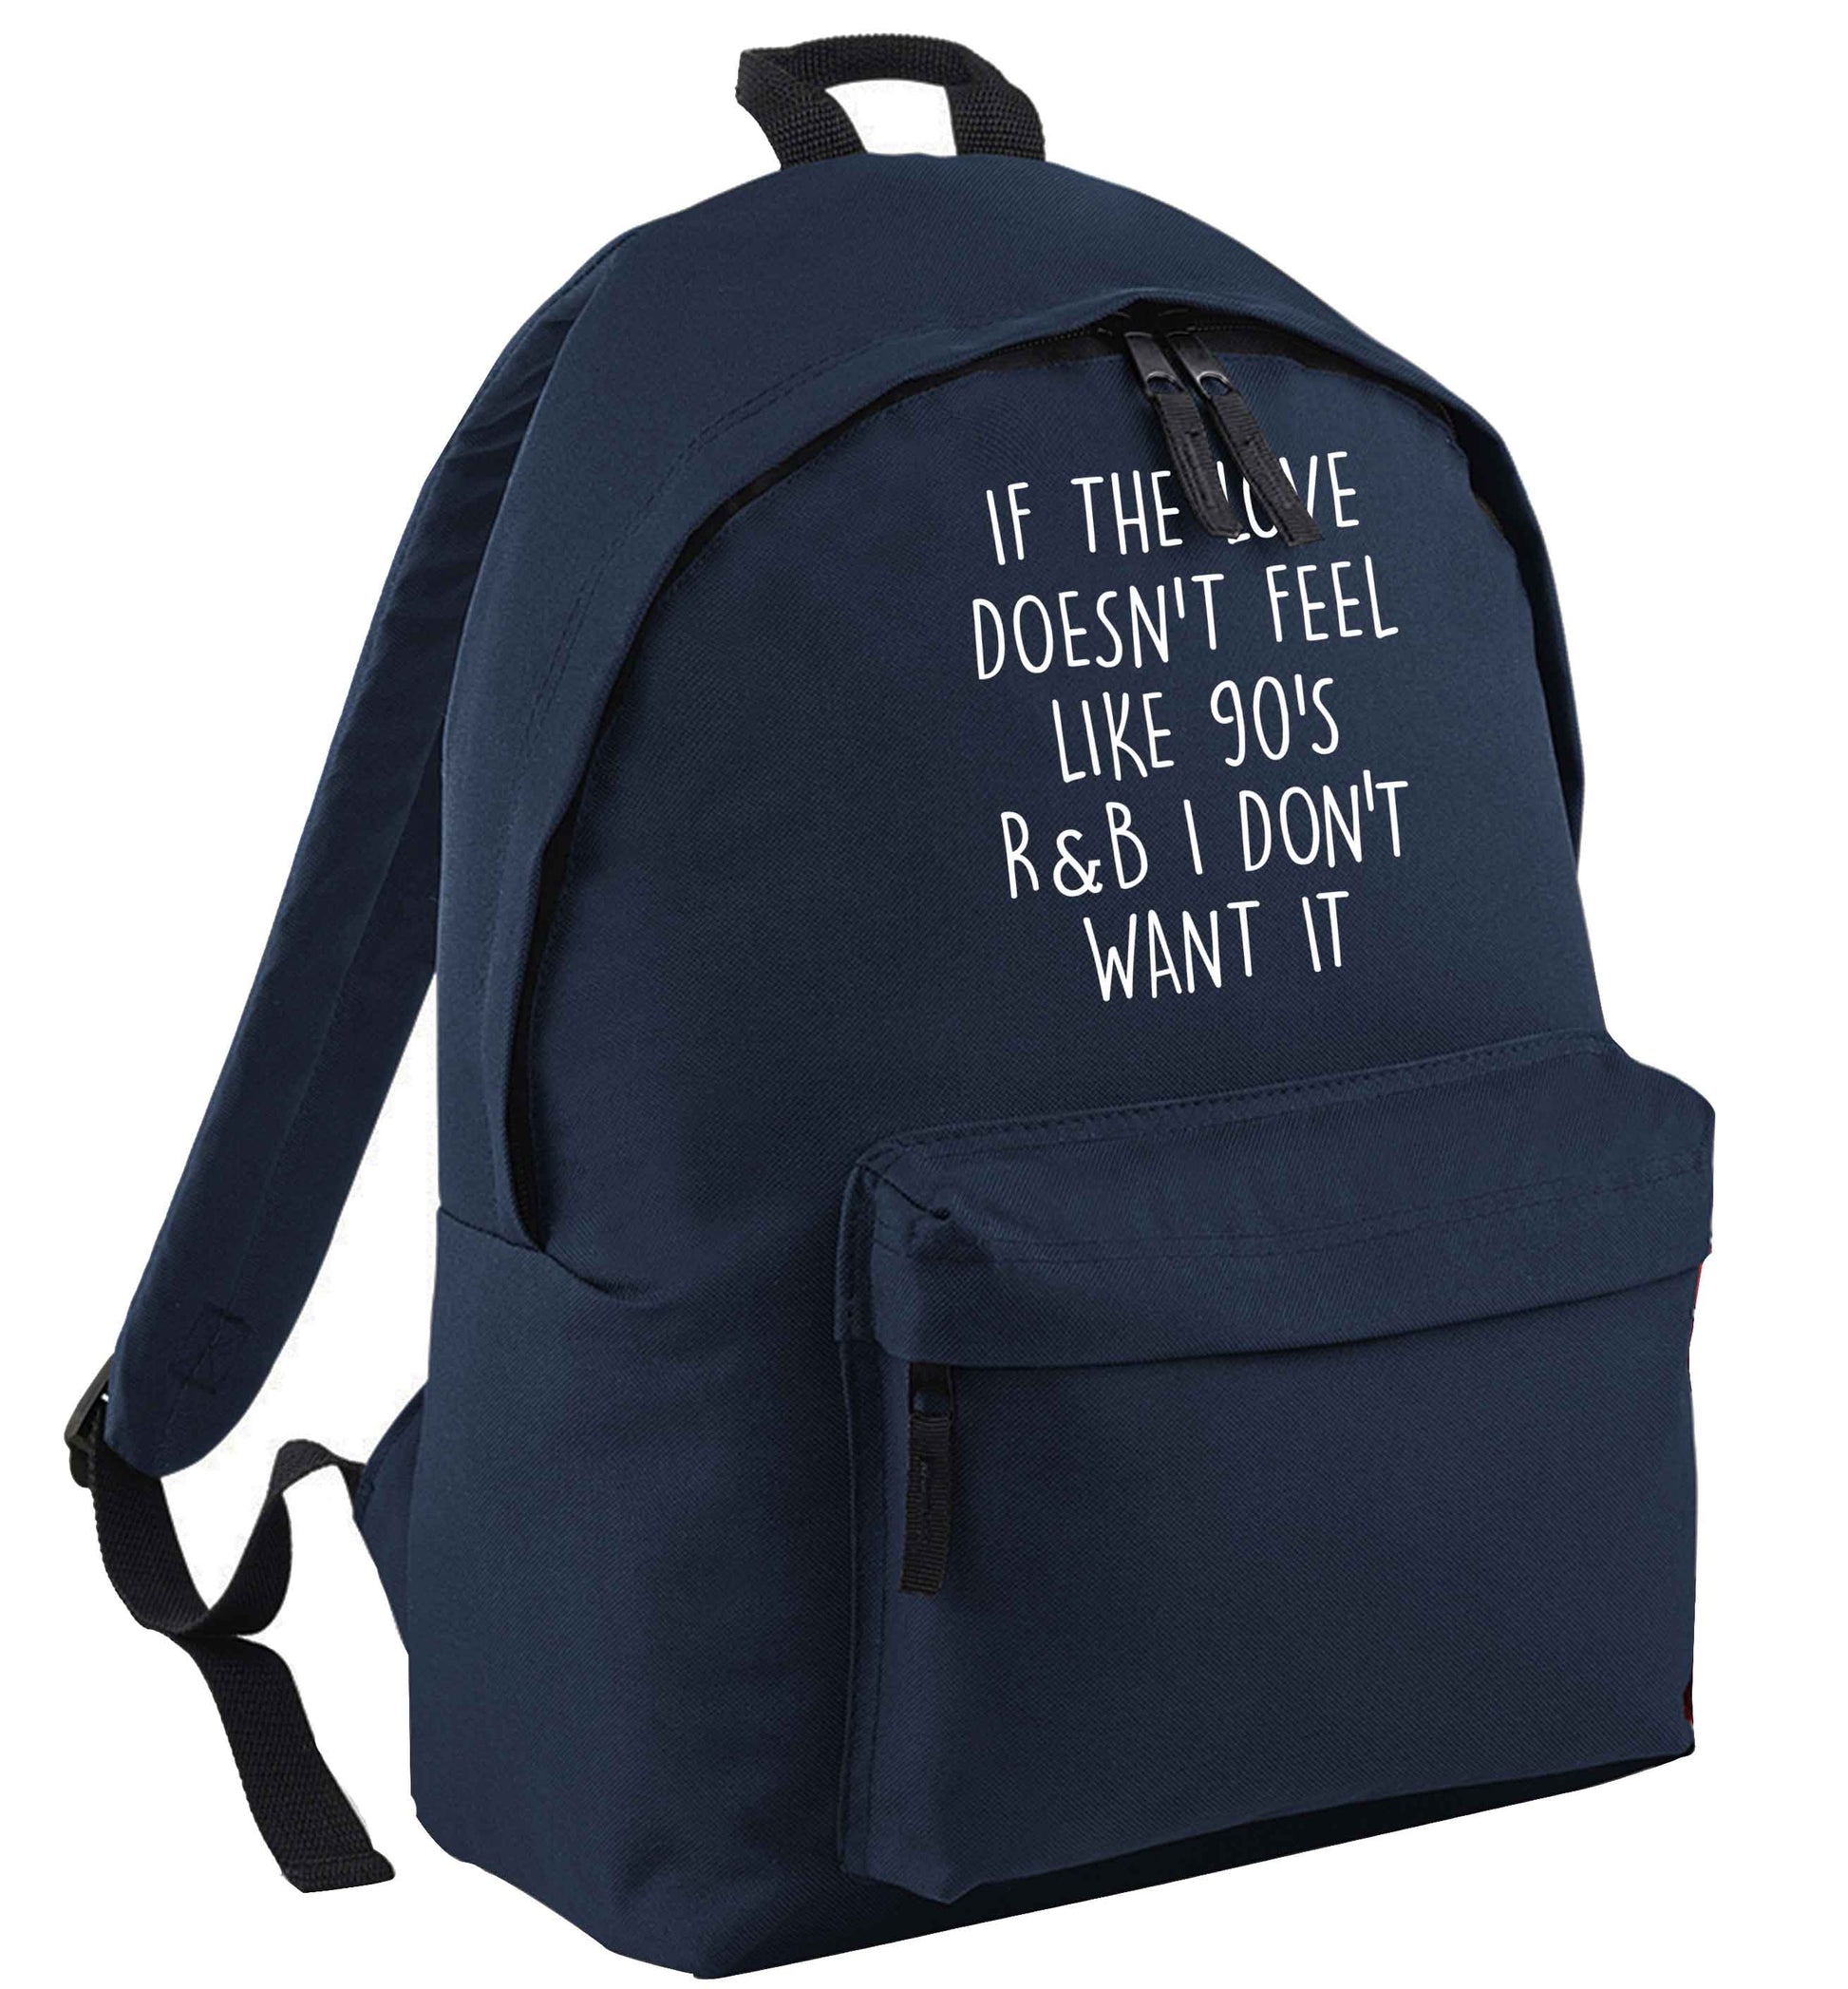 If the love doesn't feel like 90's r&b I don't want it | Children's backpack